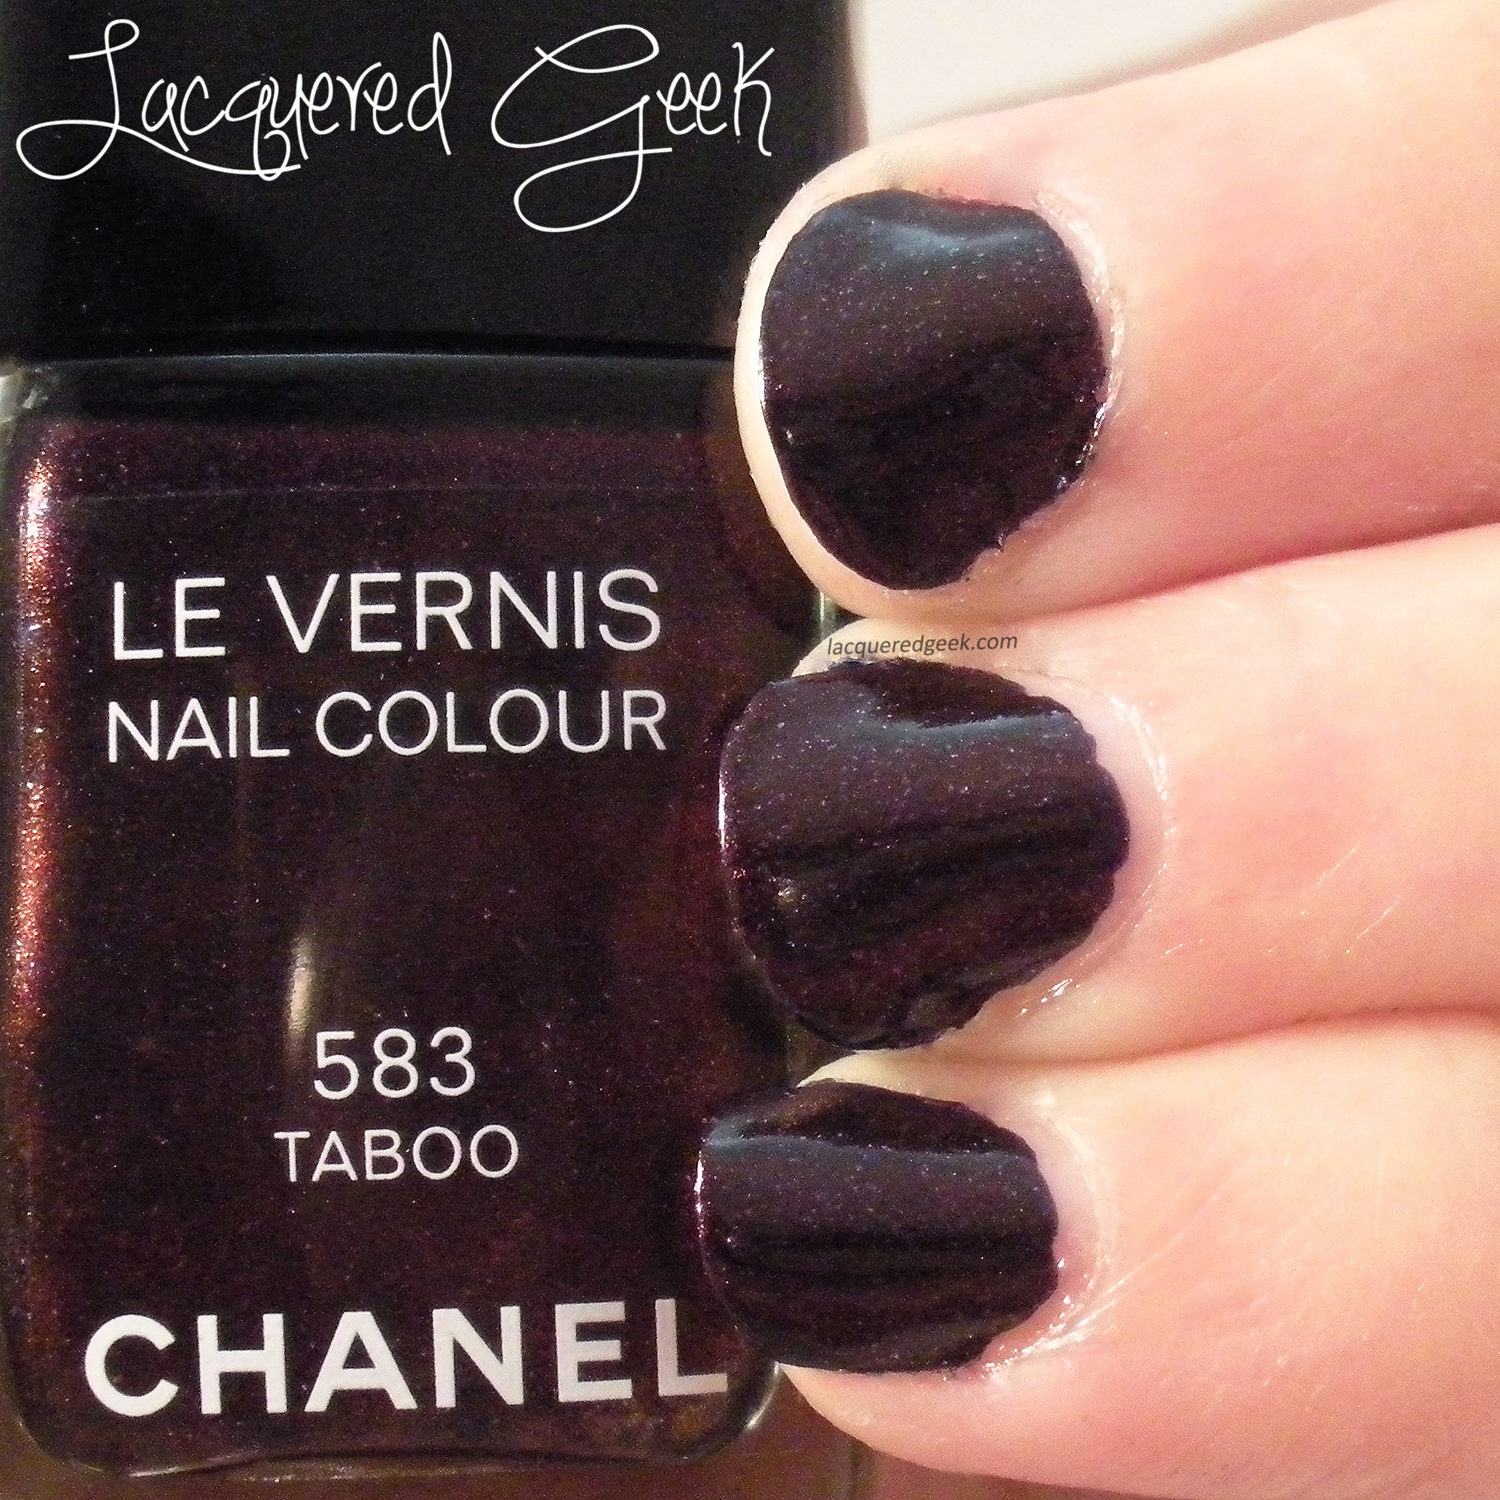 Chanel Taboo nail polish swatch